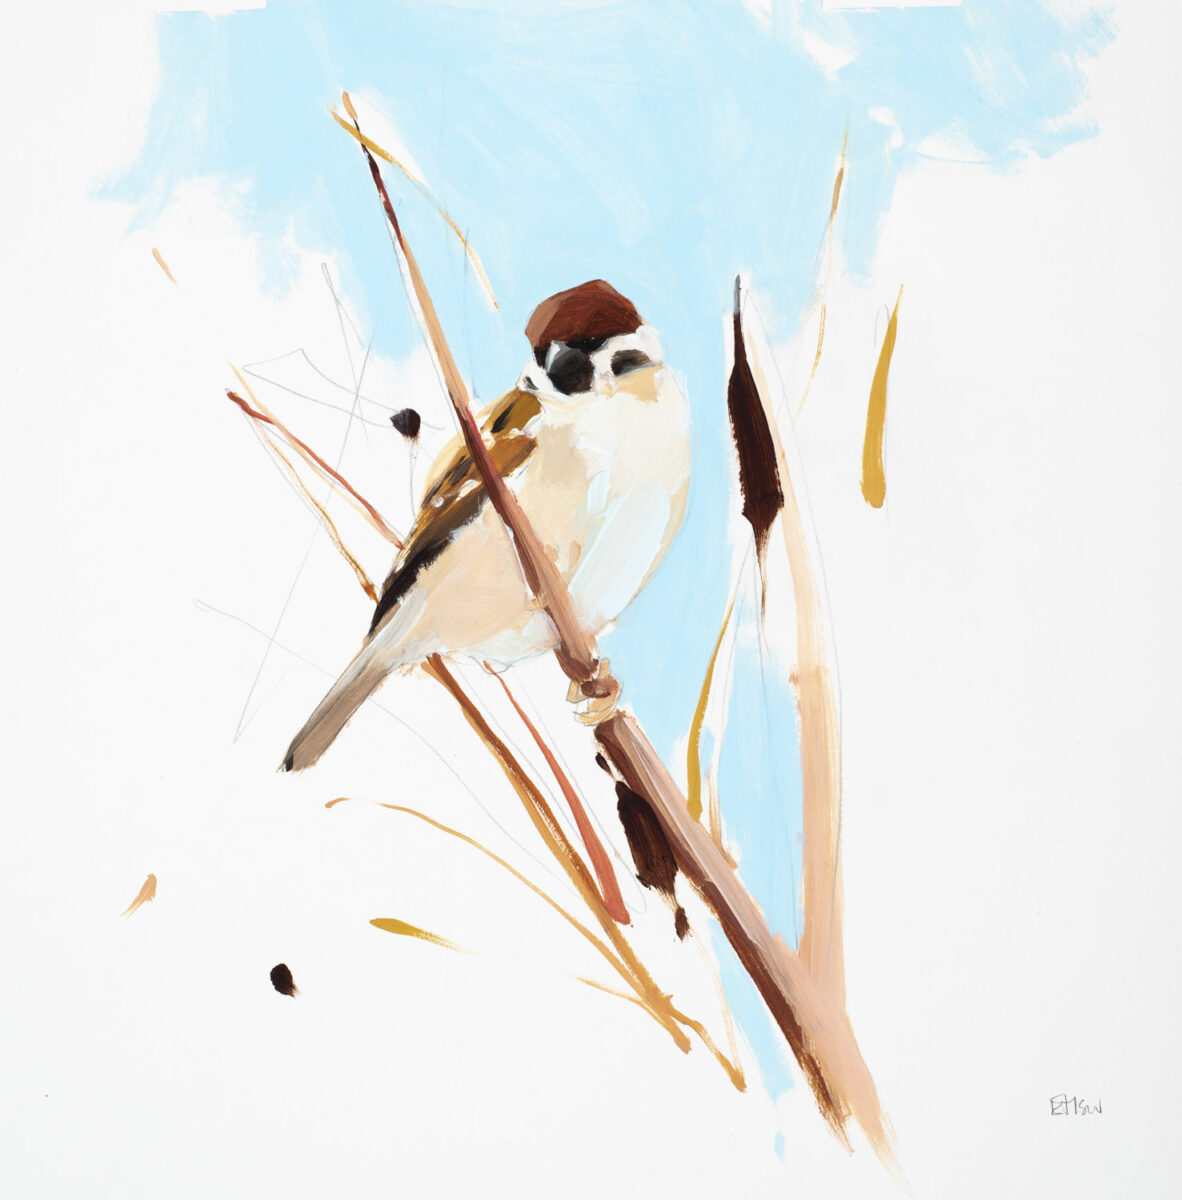 Artwork image titled: Tree Sparrow